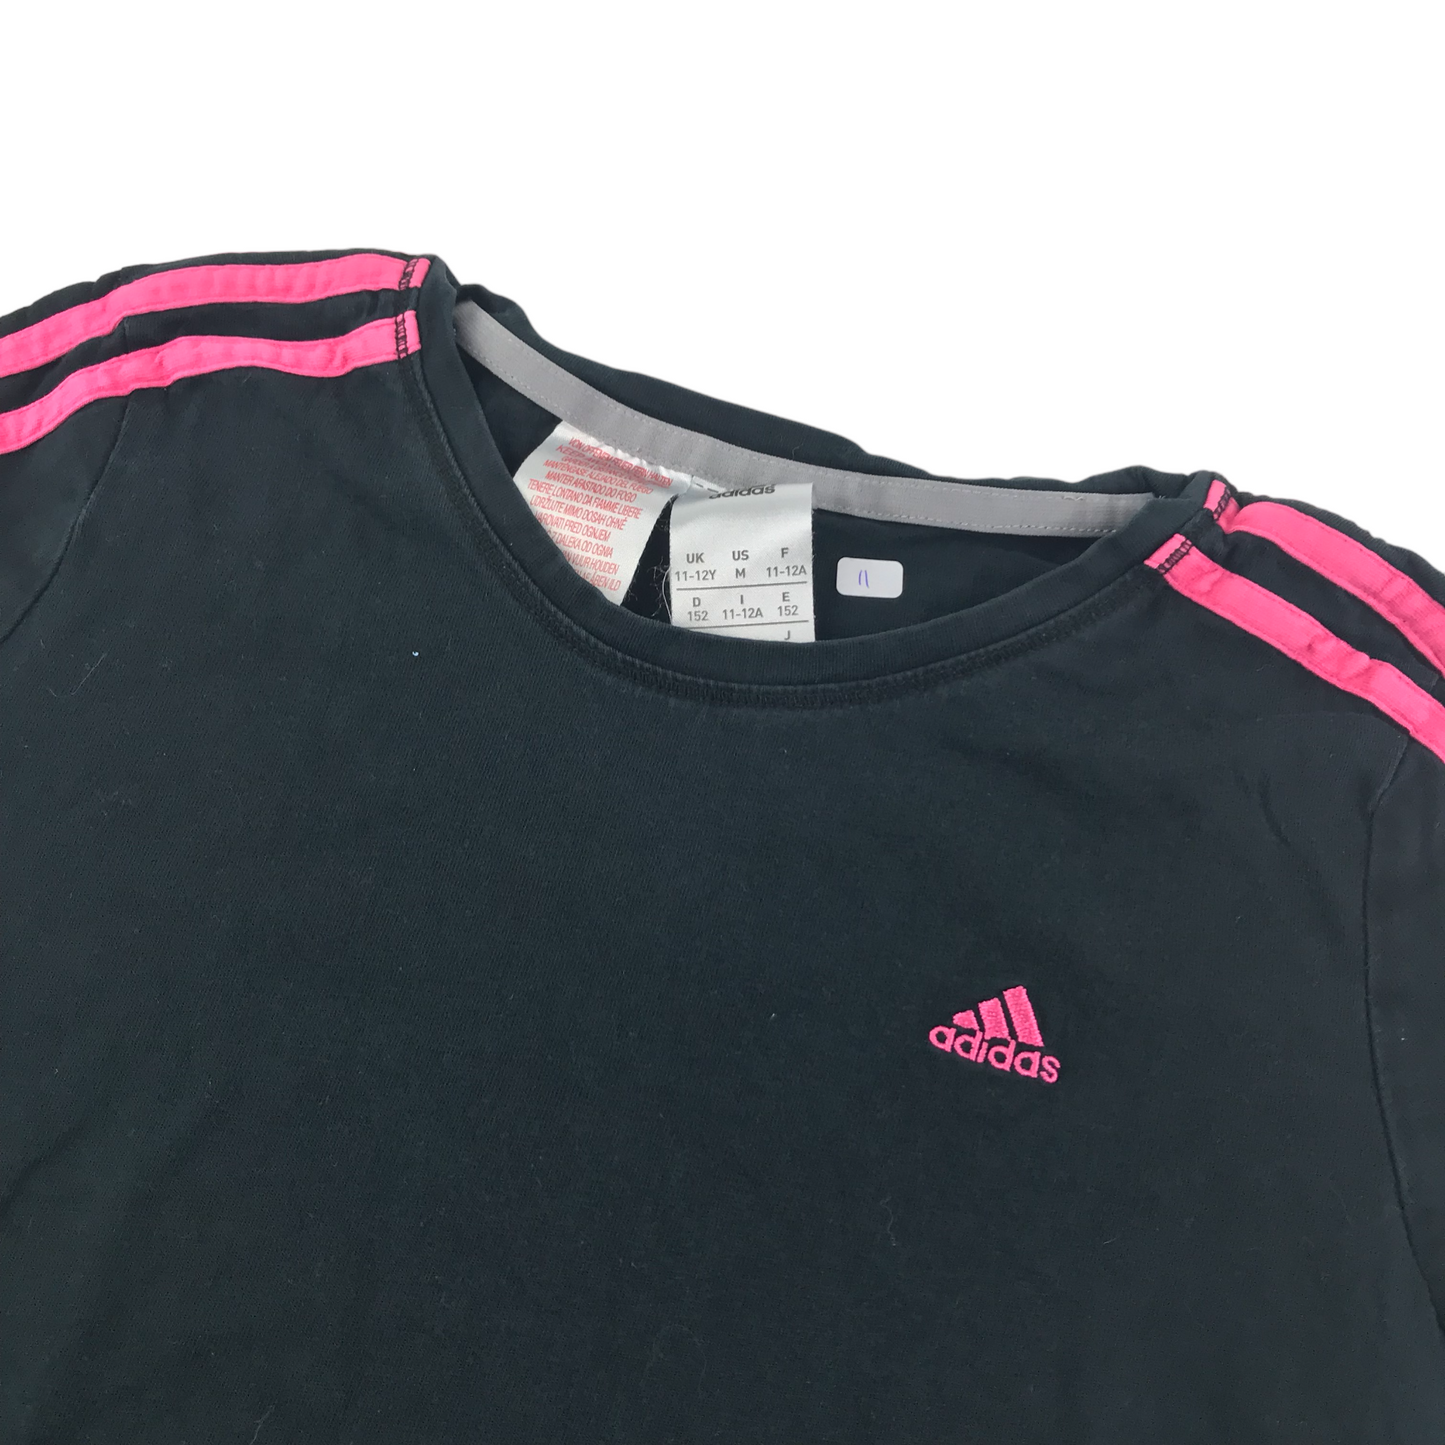 Adidas Cotton T-shirt Age 11 Black Pink Three Stripes